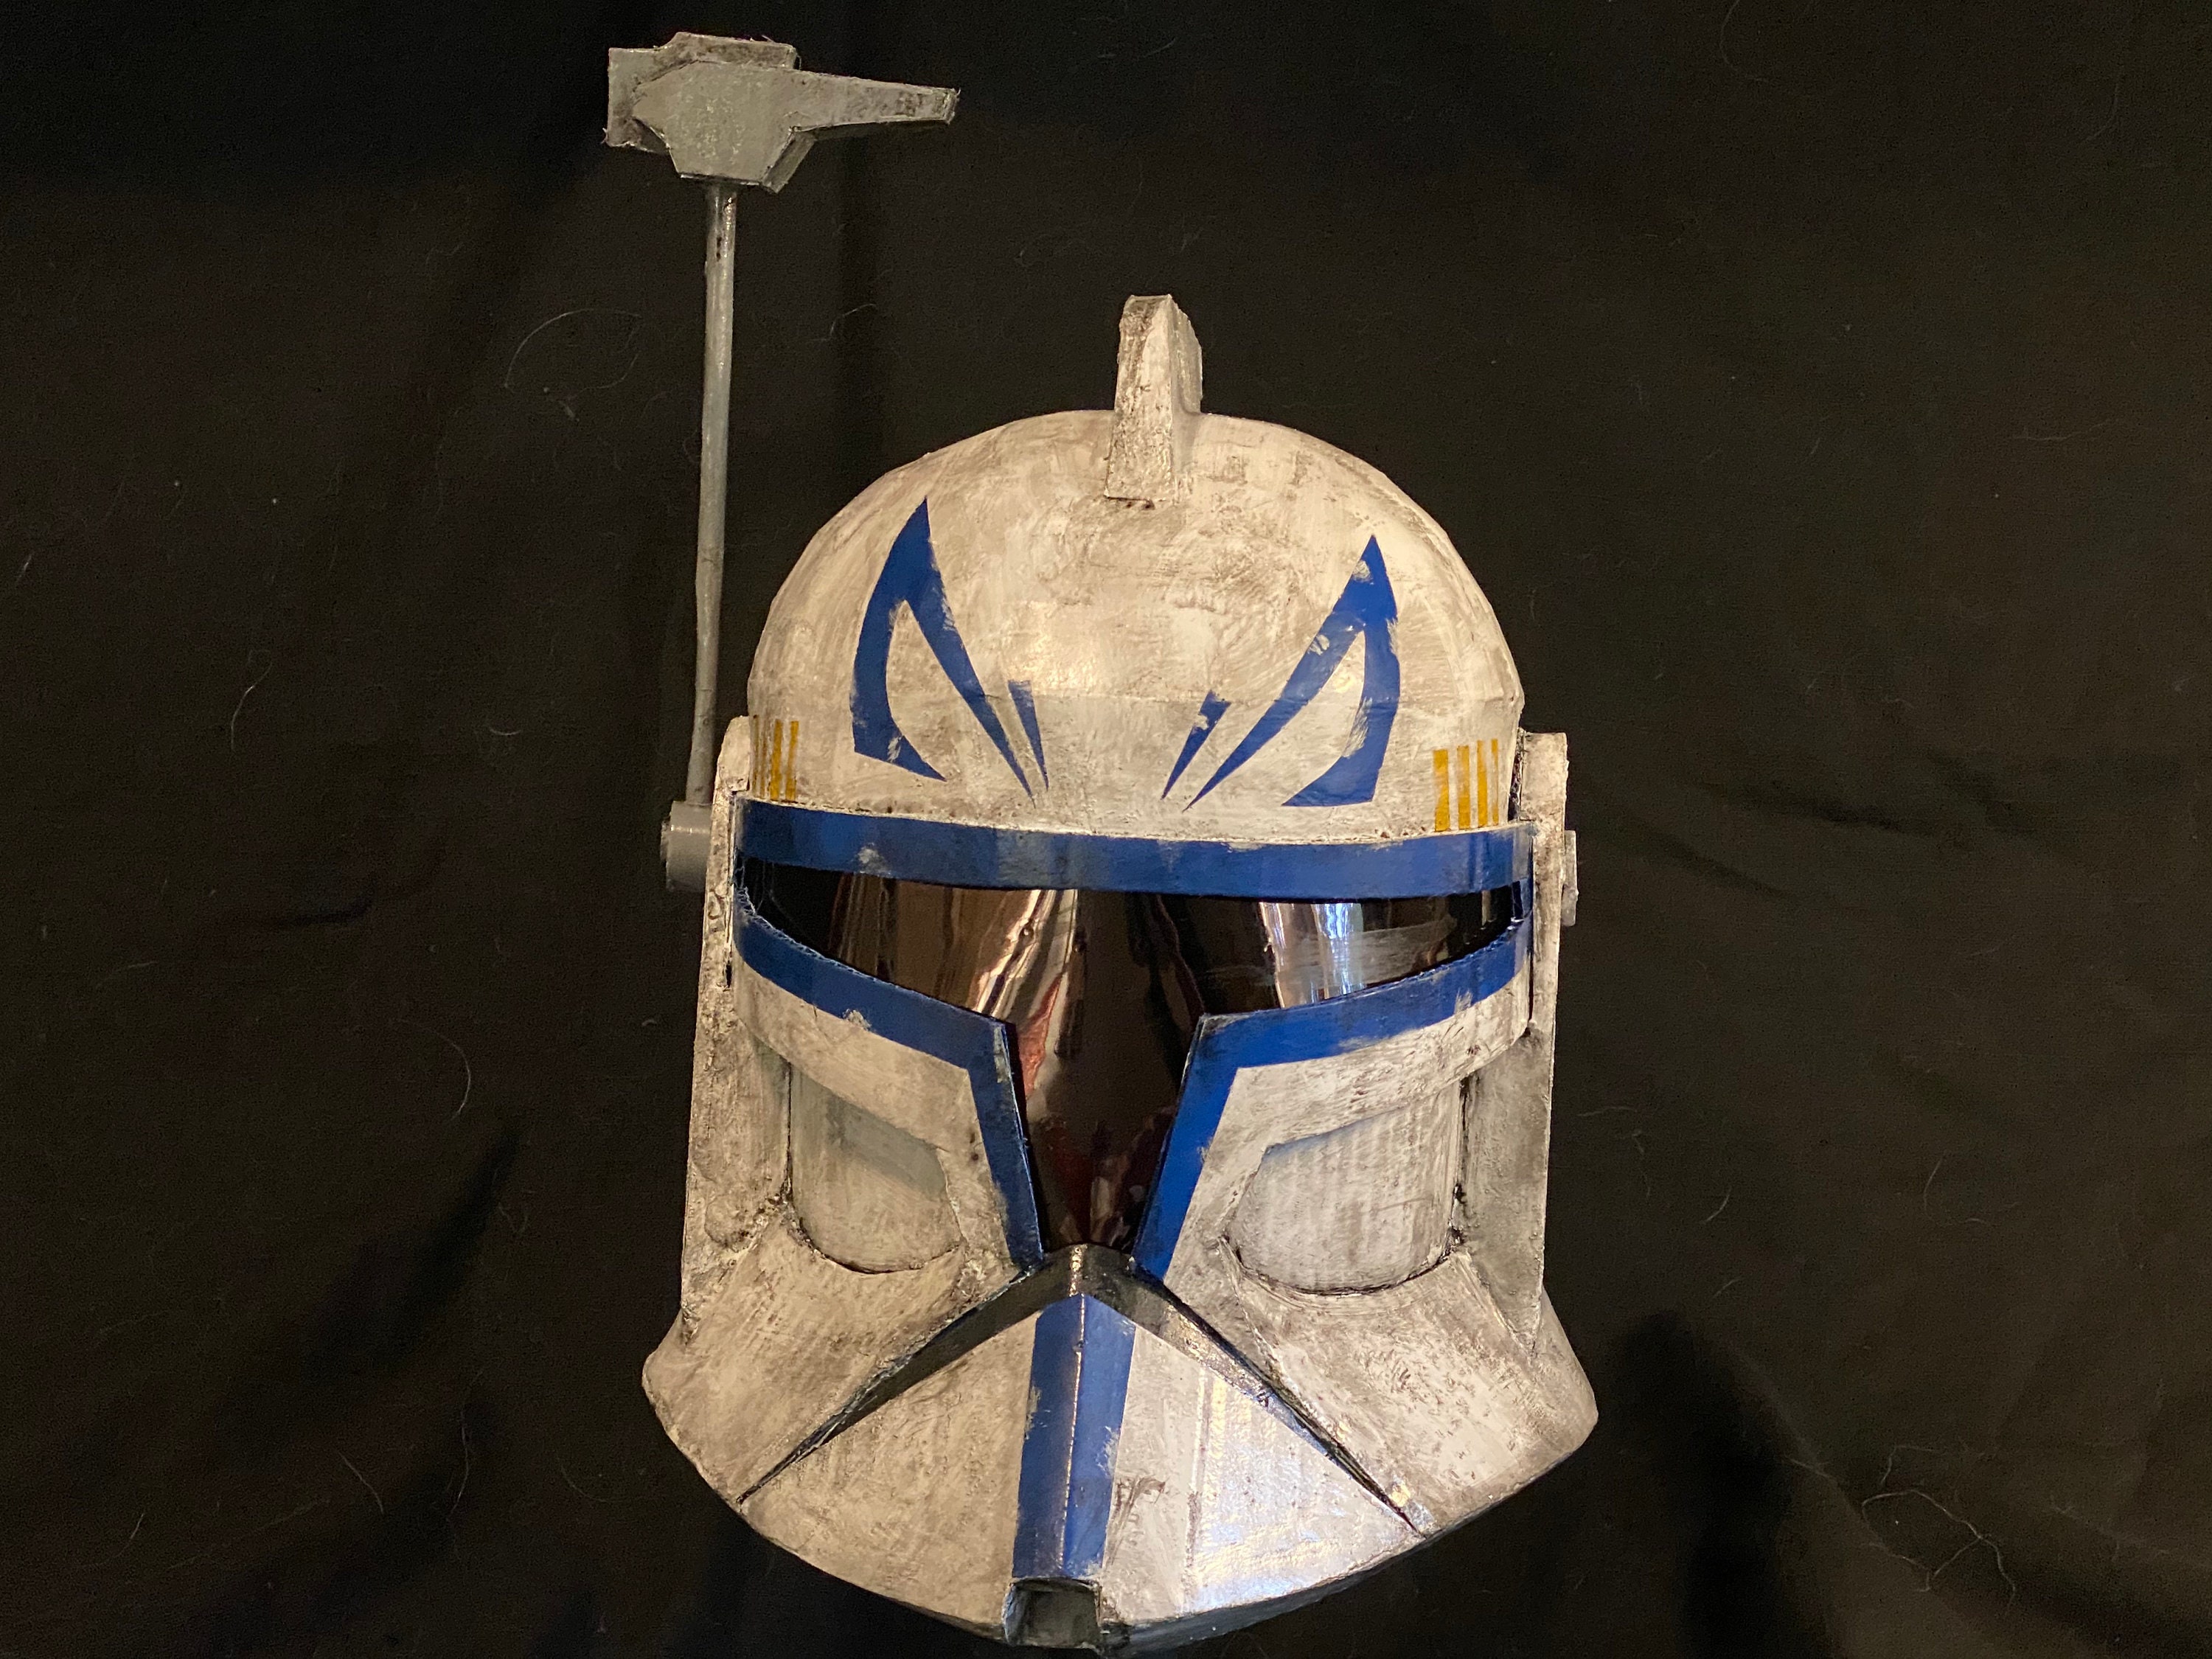 StarScorch Faceplate Space Wars Helmet from Stars